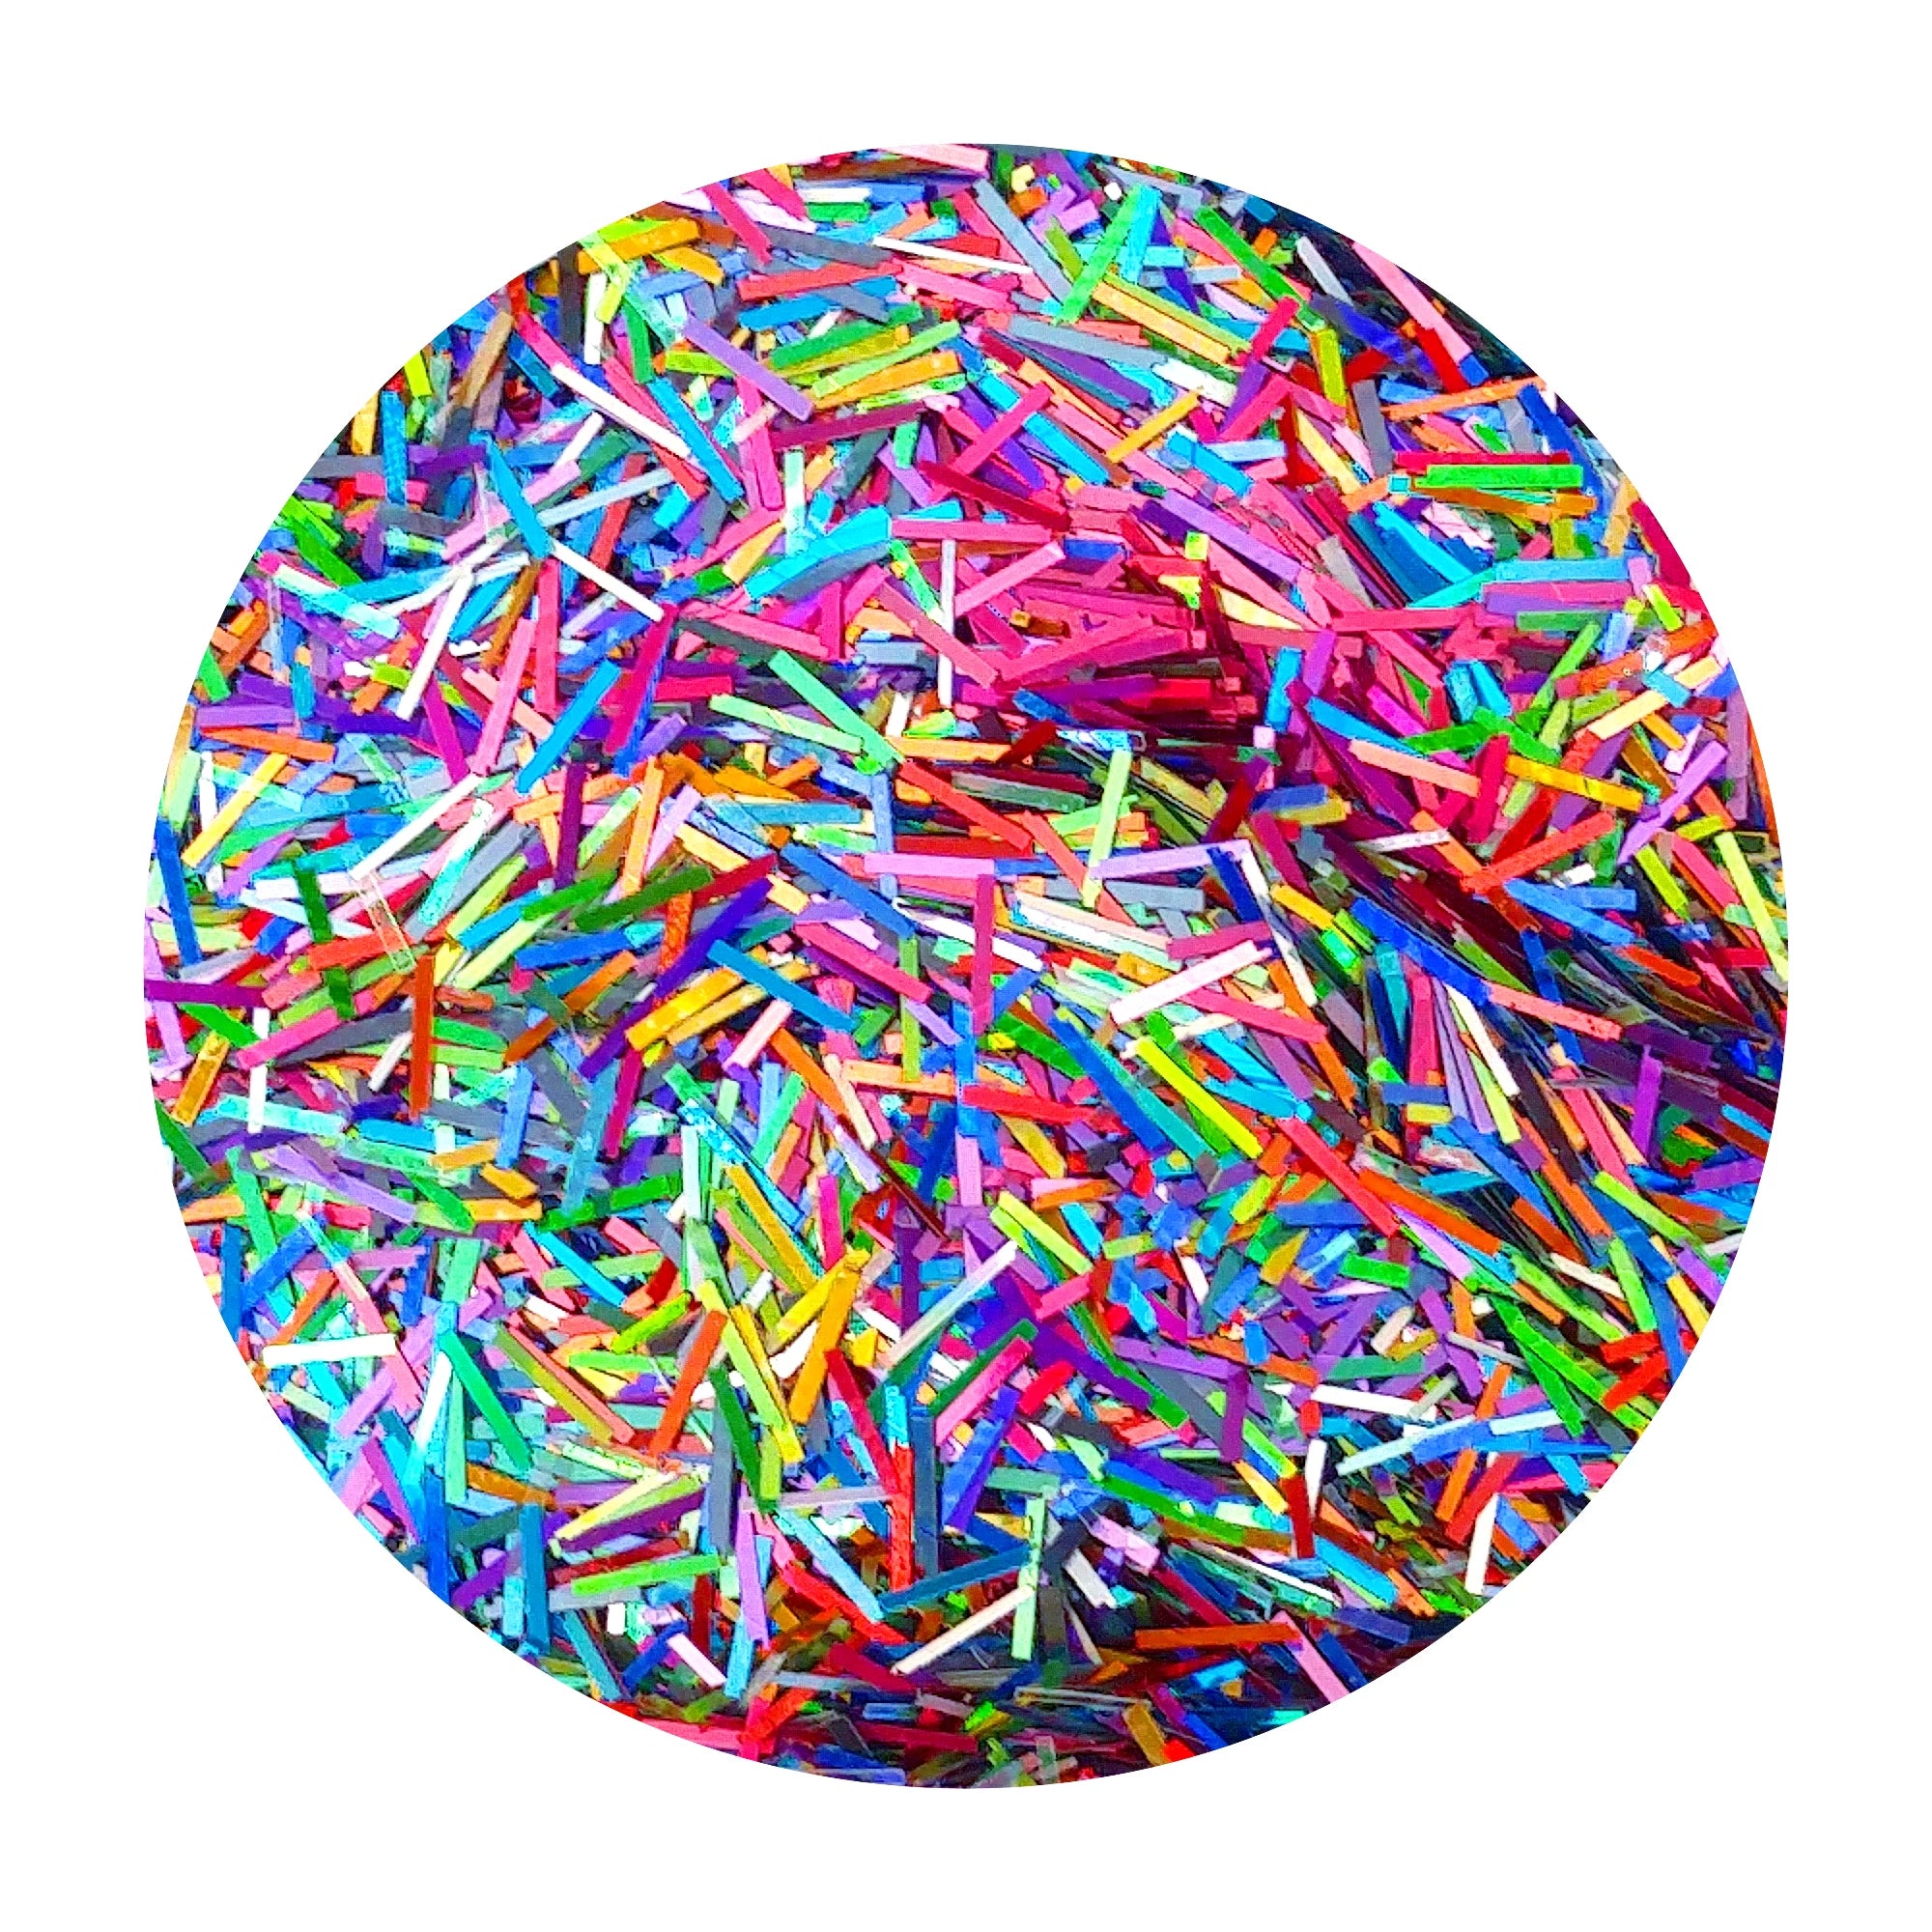 Holographic Rainbow Strip Glitter Mix - Jelly Bean Rainbow By Crazoulis GlitterHolographic Rainbow Strip Glitter Mix - Jelly Bean Rainbow By Crazoulis Glitter